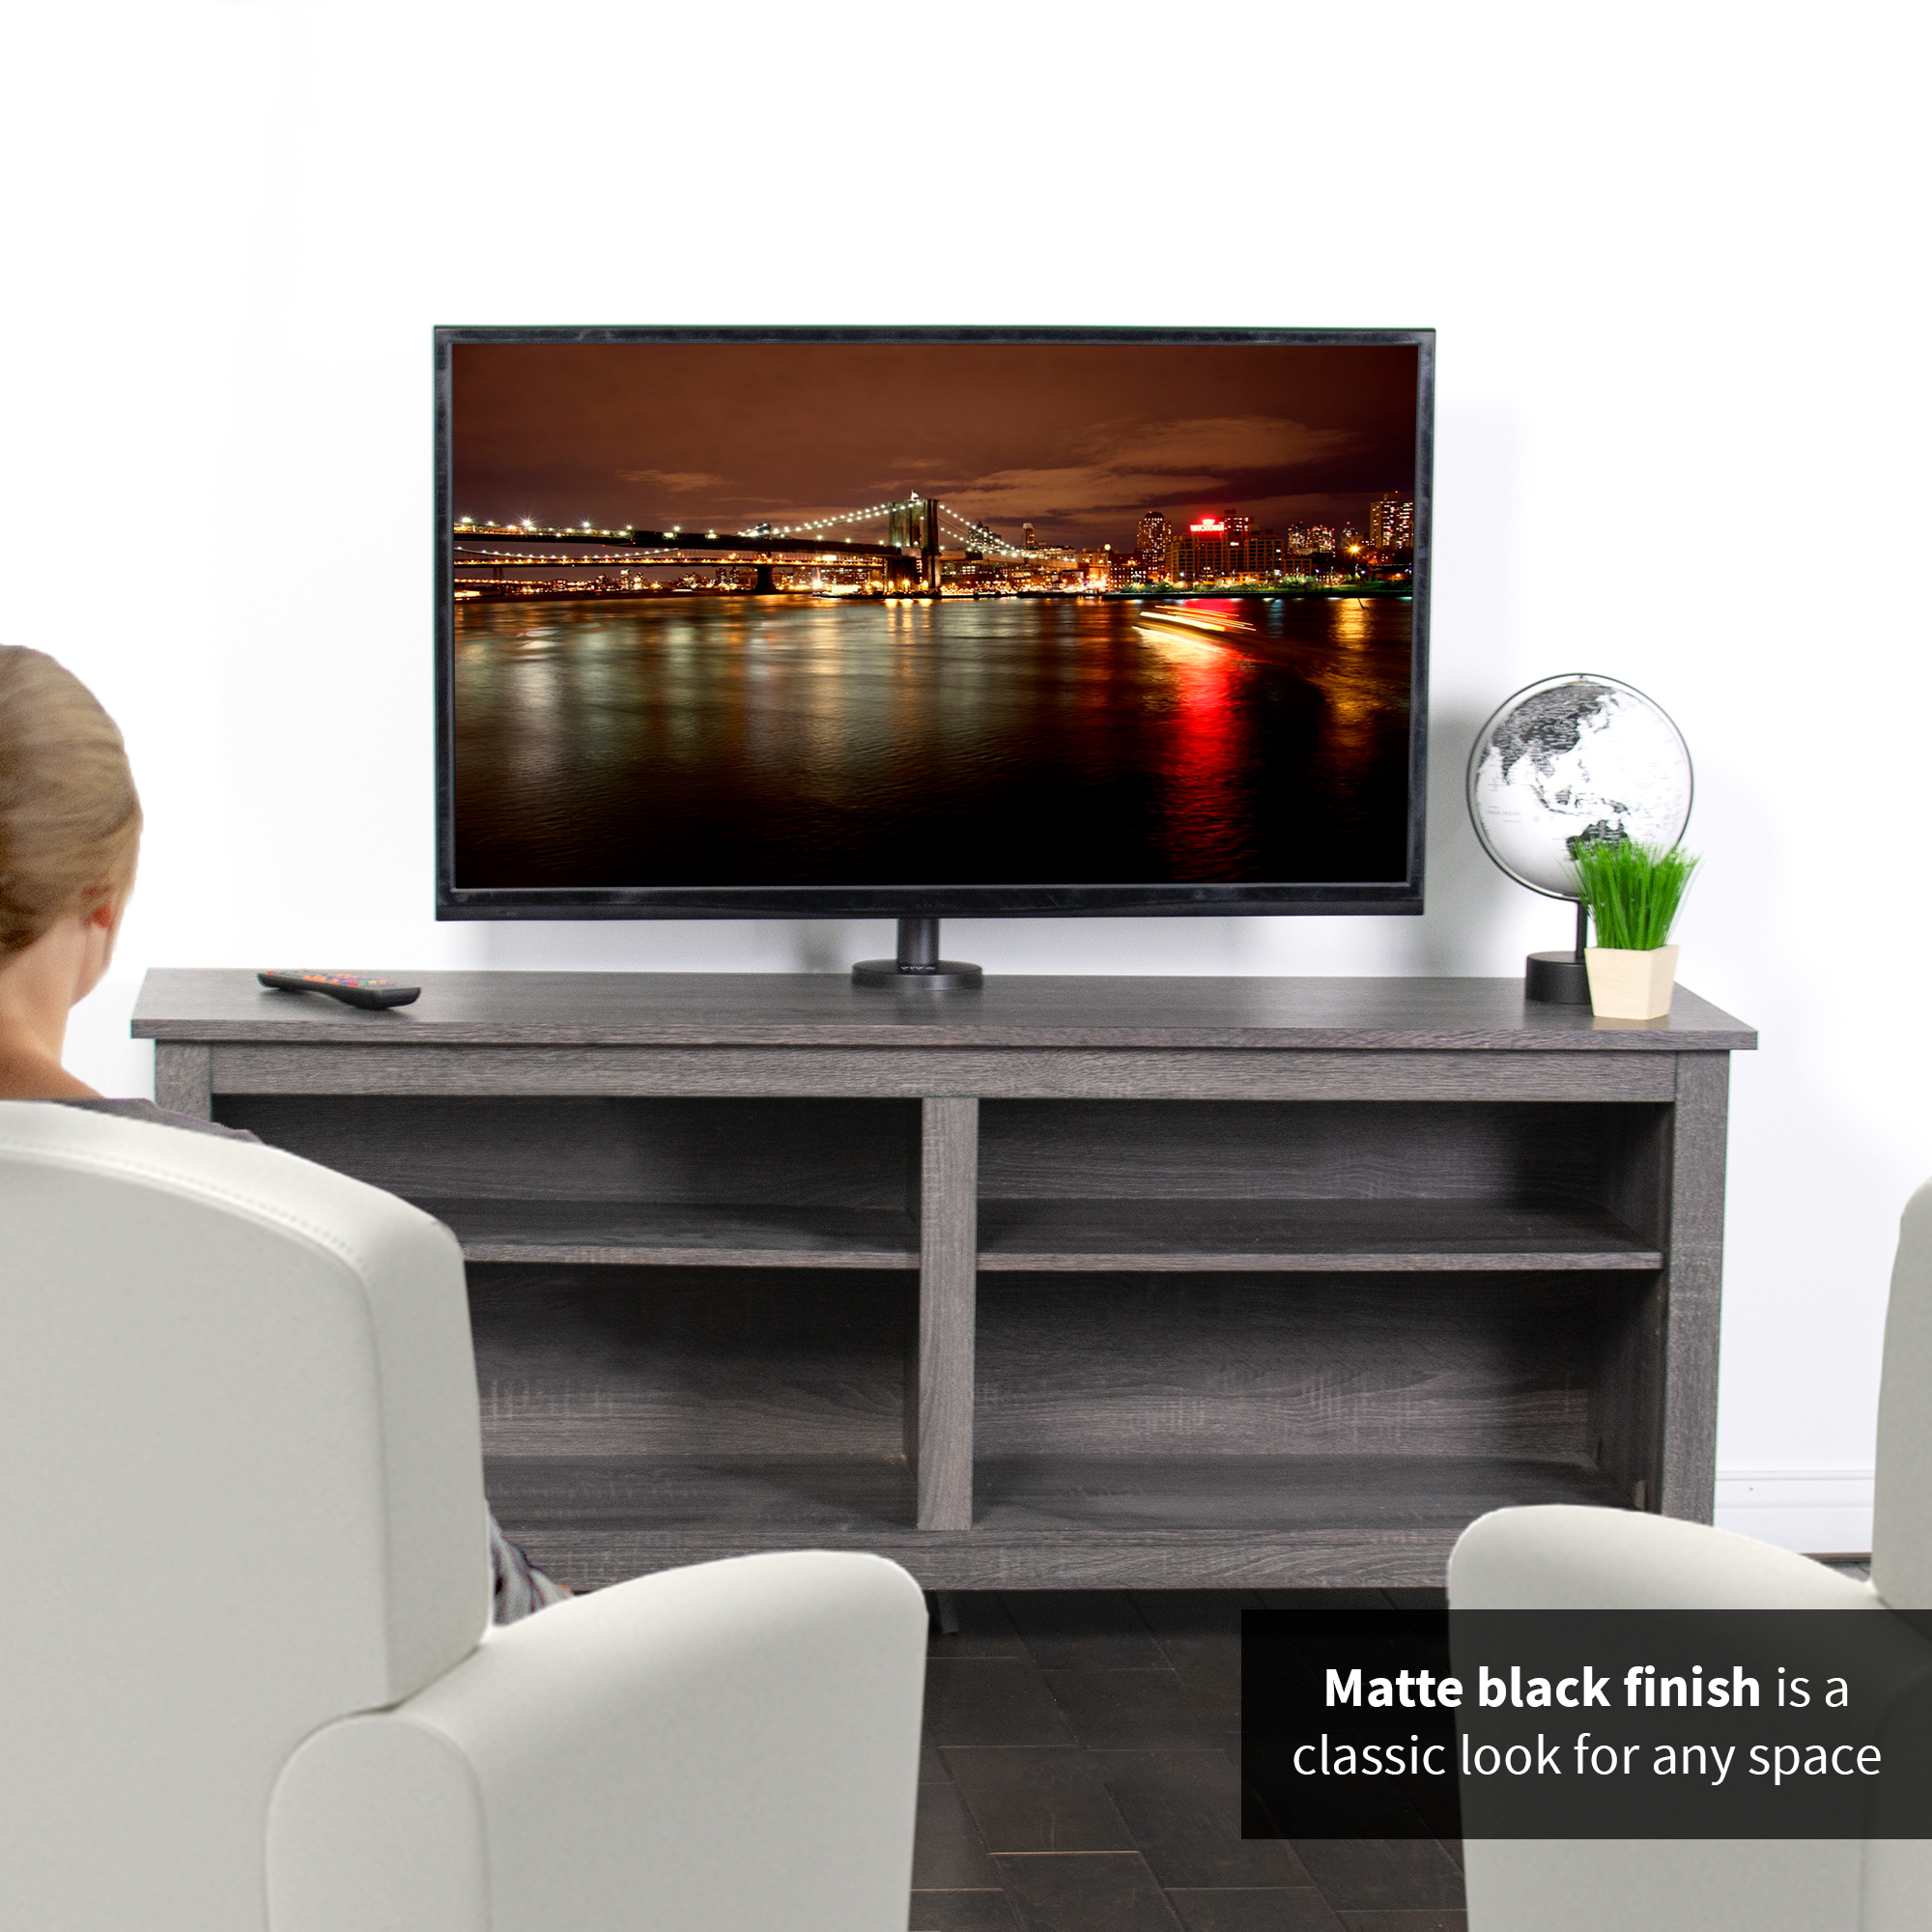 VIVO Swivel Bolt-Down Desktop TV VESA Mount for Screen Sizes 23" to 43" - image 5 of 6